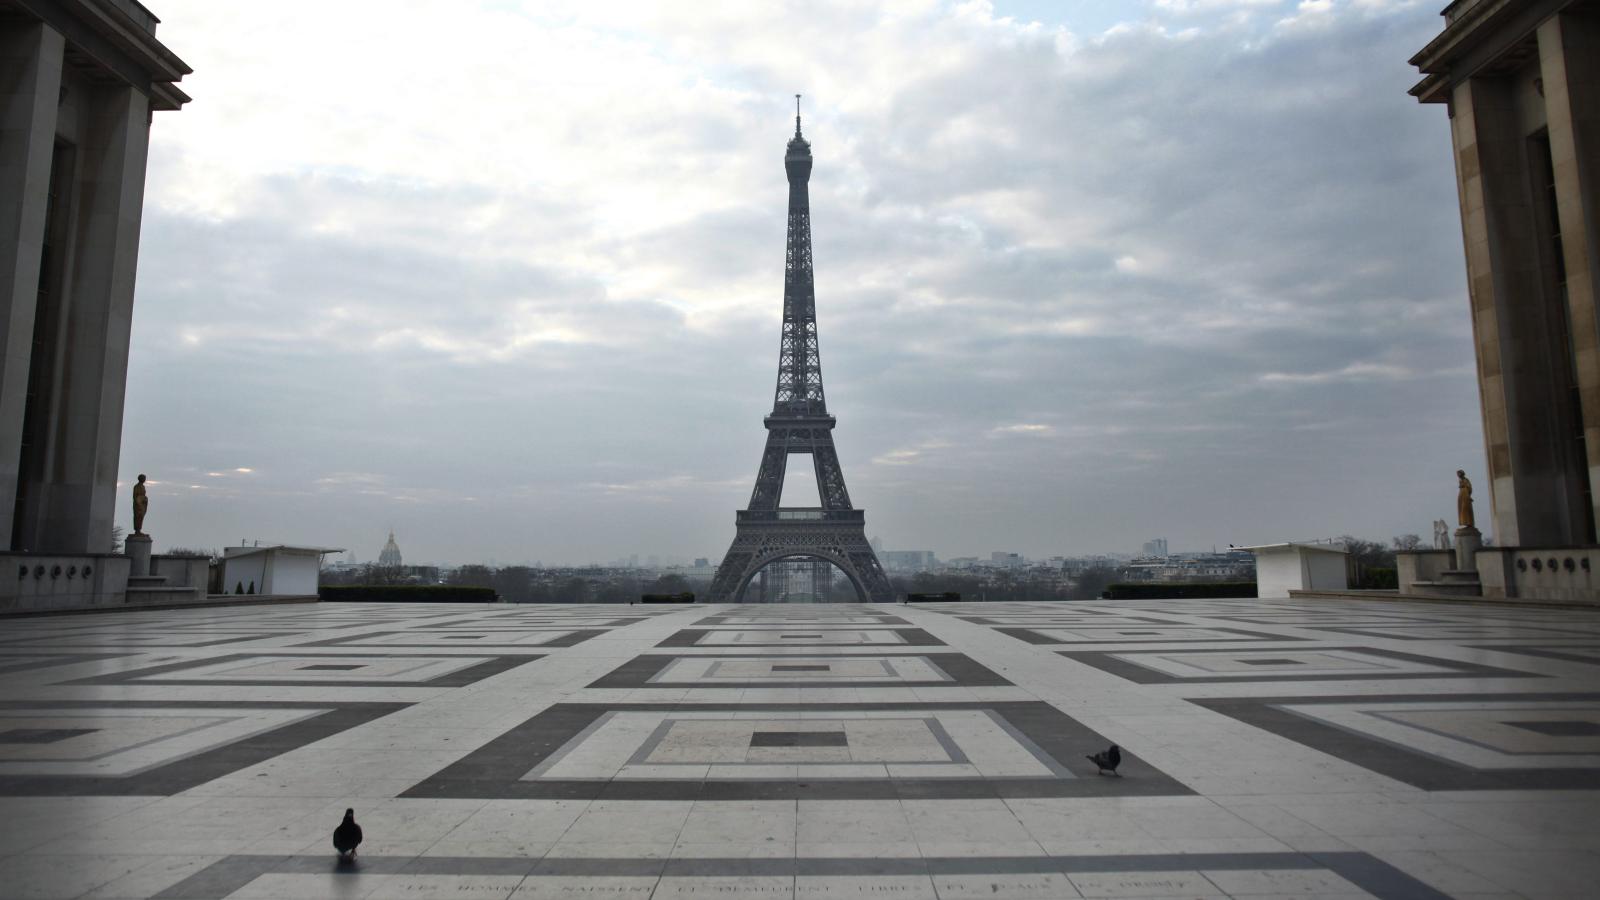 Paris with no tourists